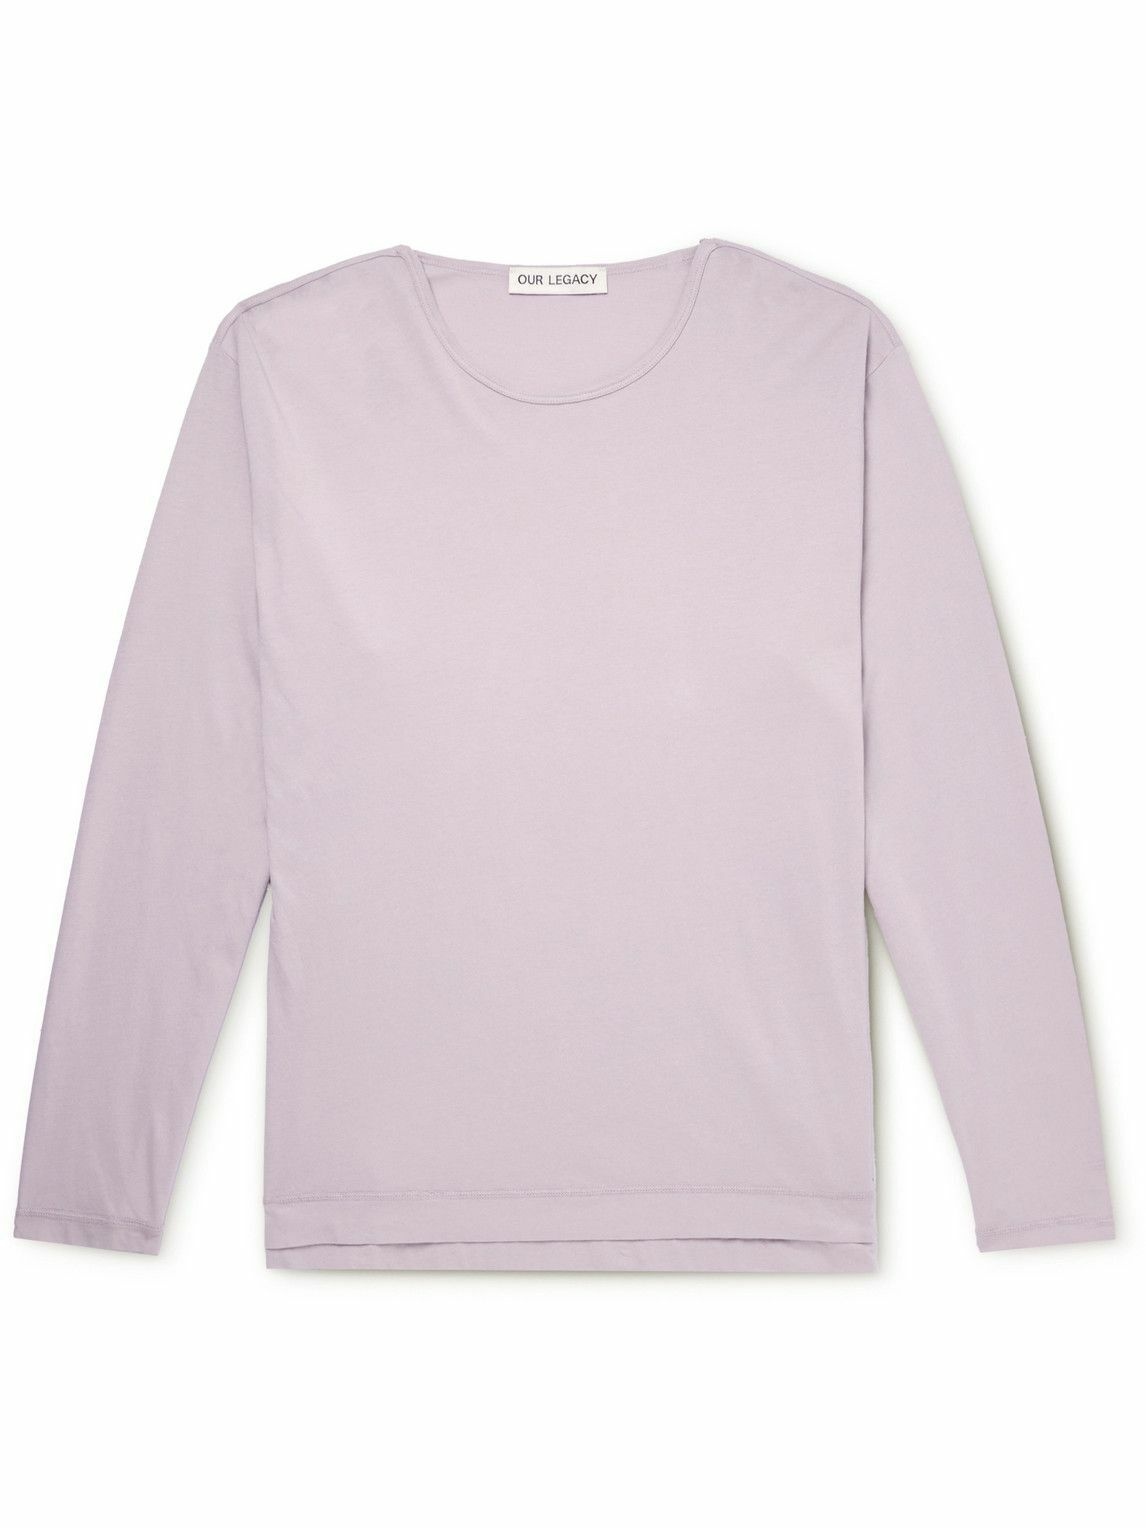 Photo: Our Legacy - Parachute Cotton-Jersey T-Shirt - Pink